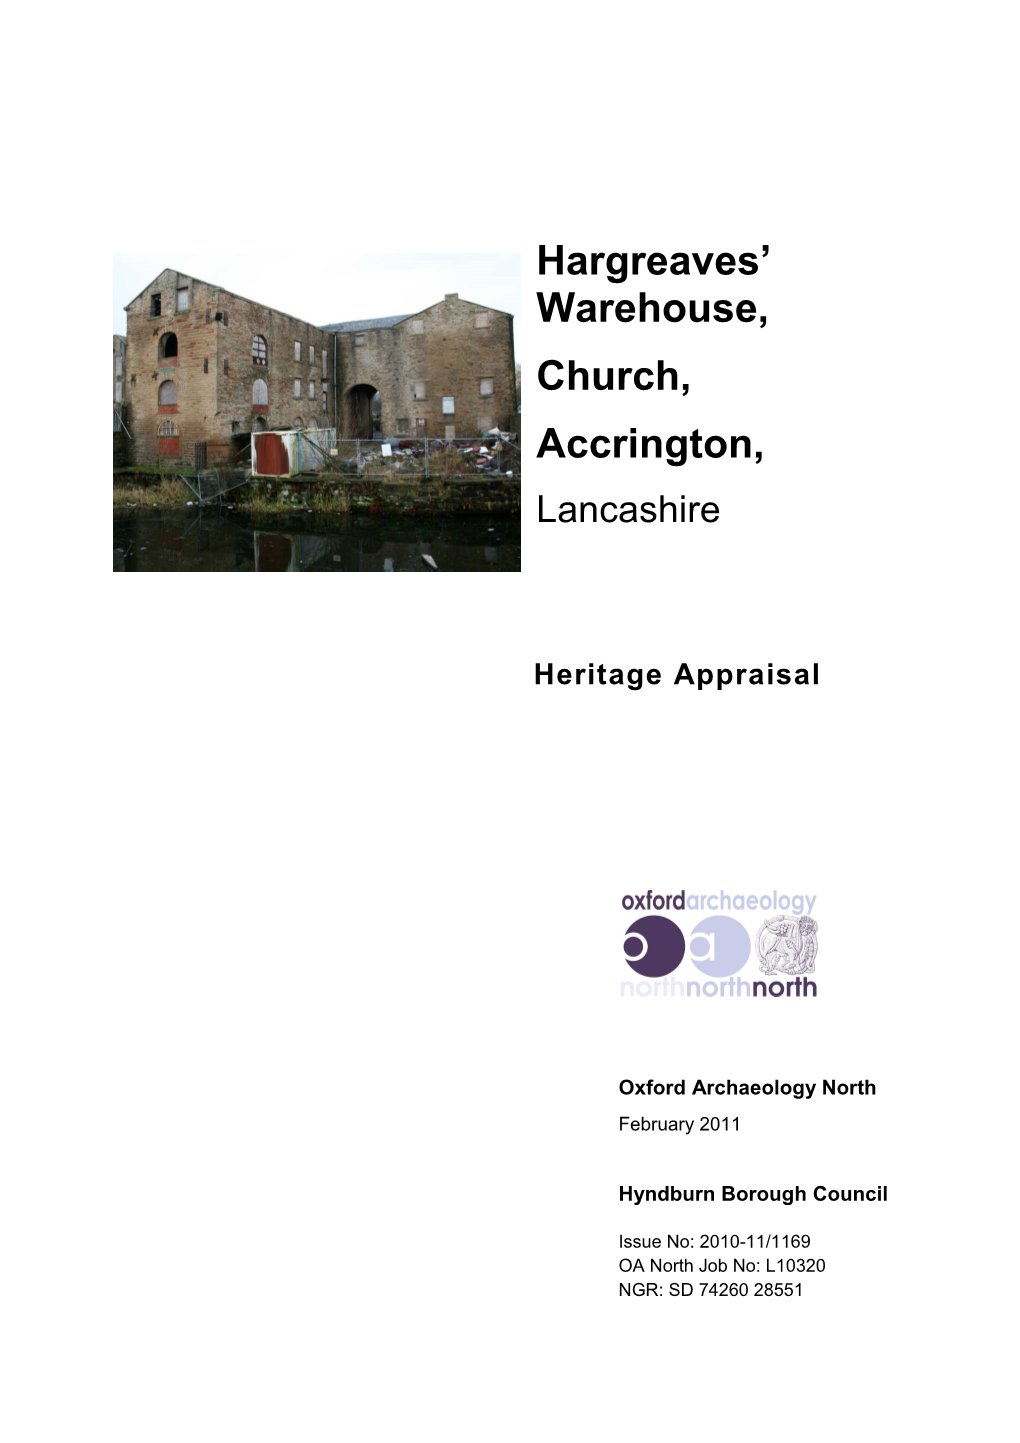 Hargreaves' Warehouse, Church, Accrington